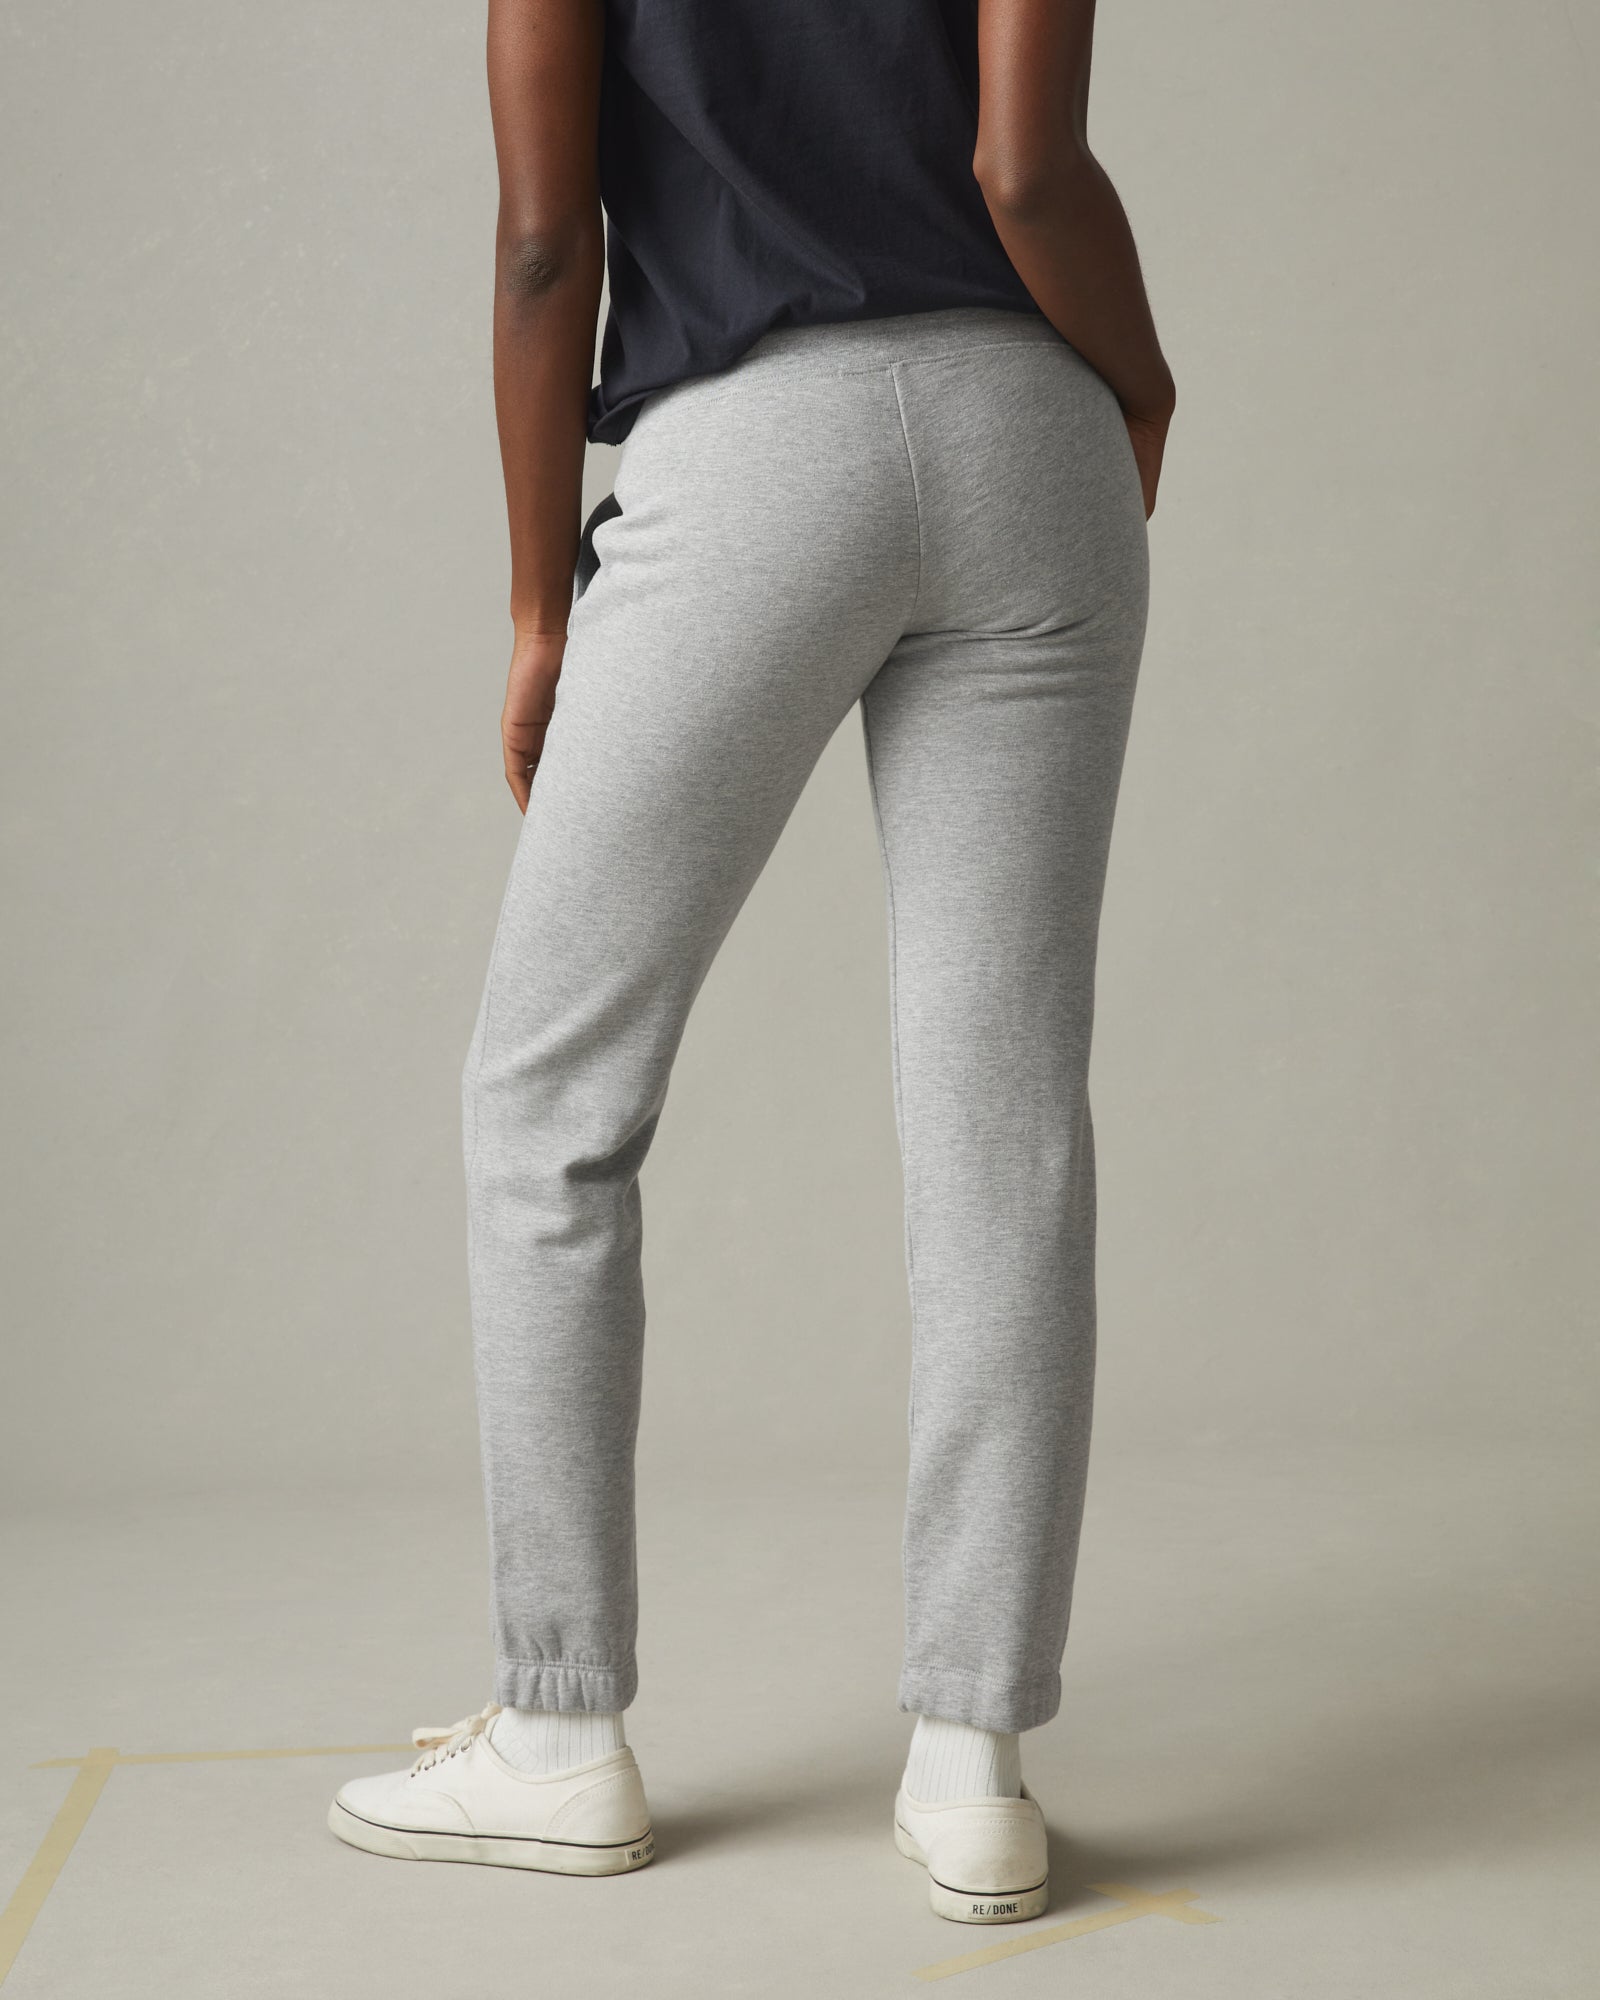 Athletic Works Solid Blue Sweatpants Size 3X (Plus) - 36% off